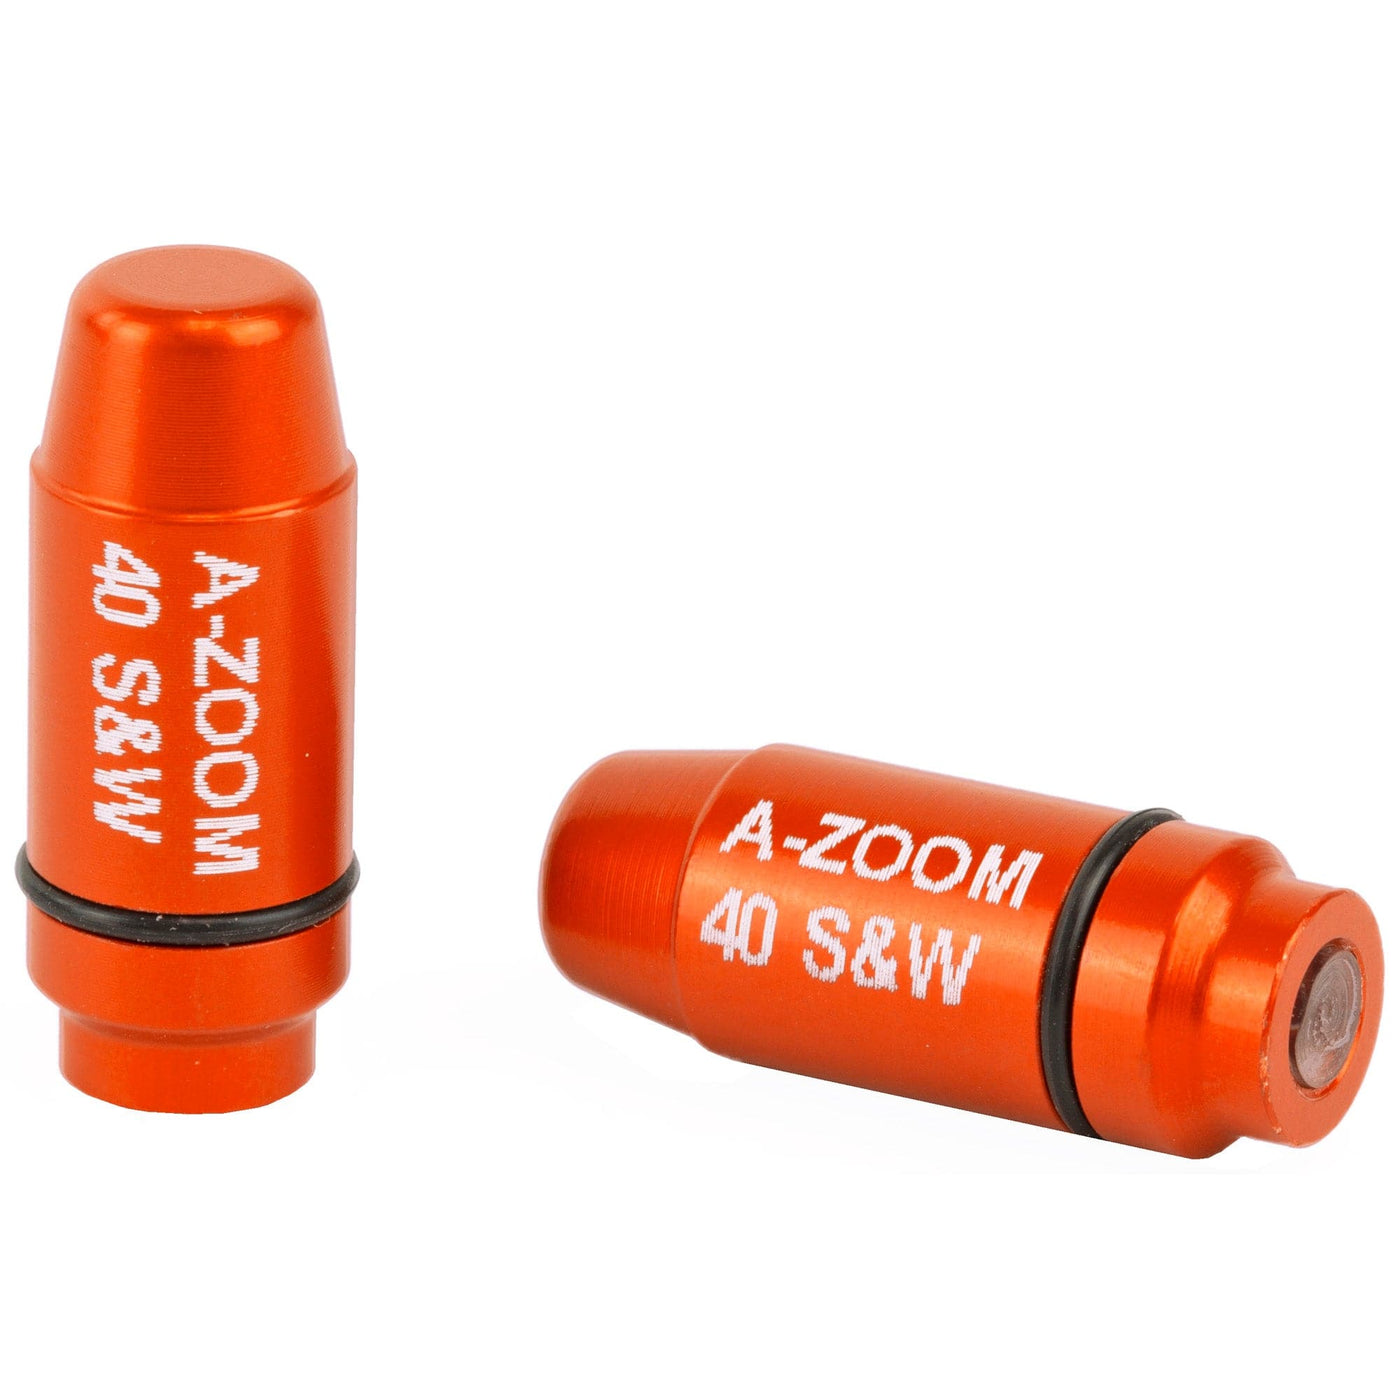 A-Zoom Azoom Striker Snap Caps 40s&w 2/pk Ammo